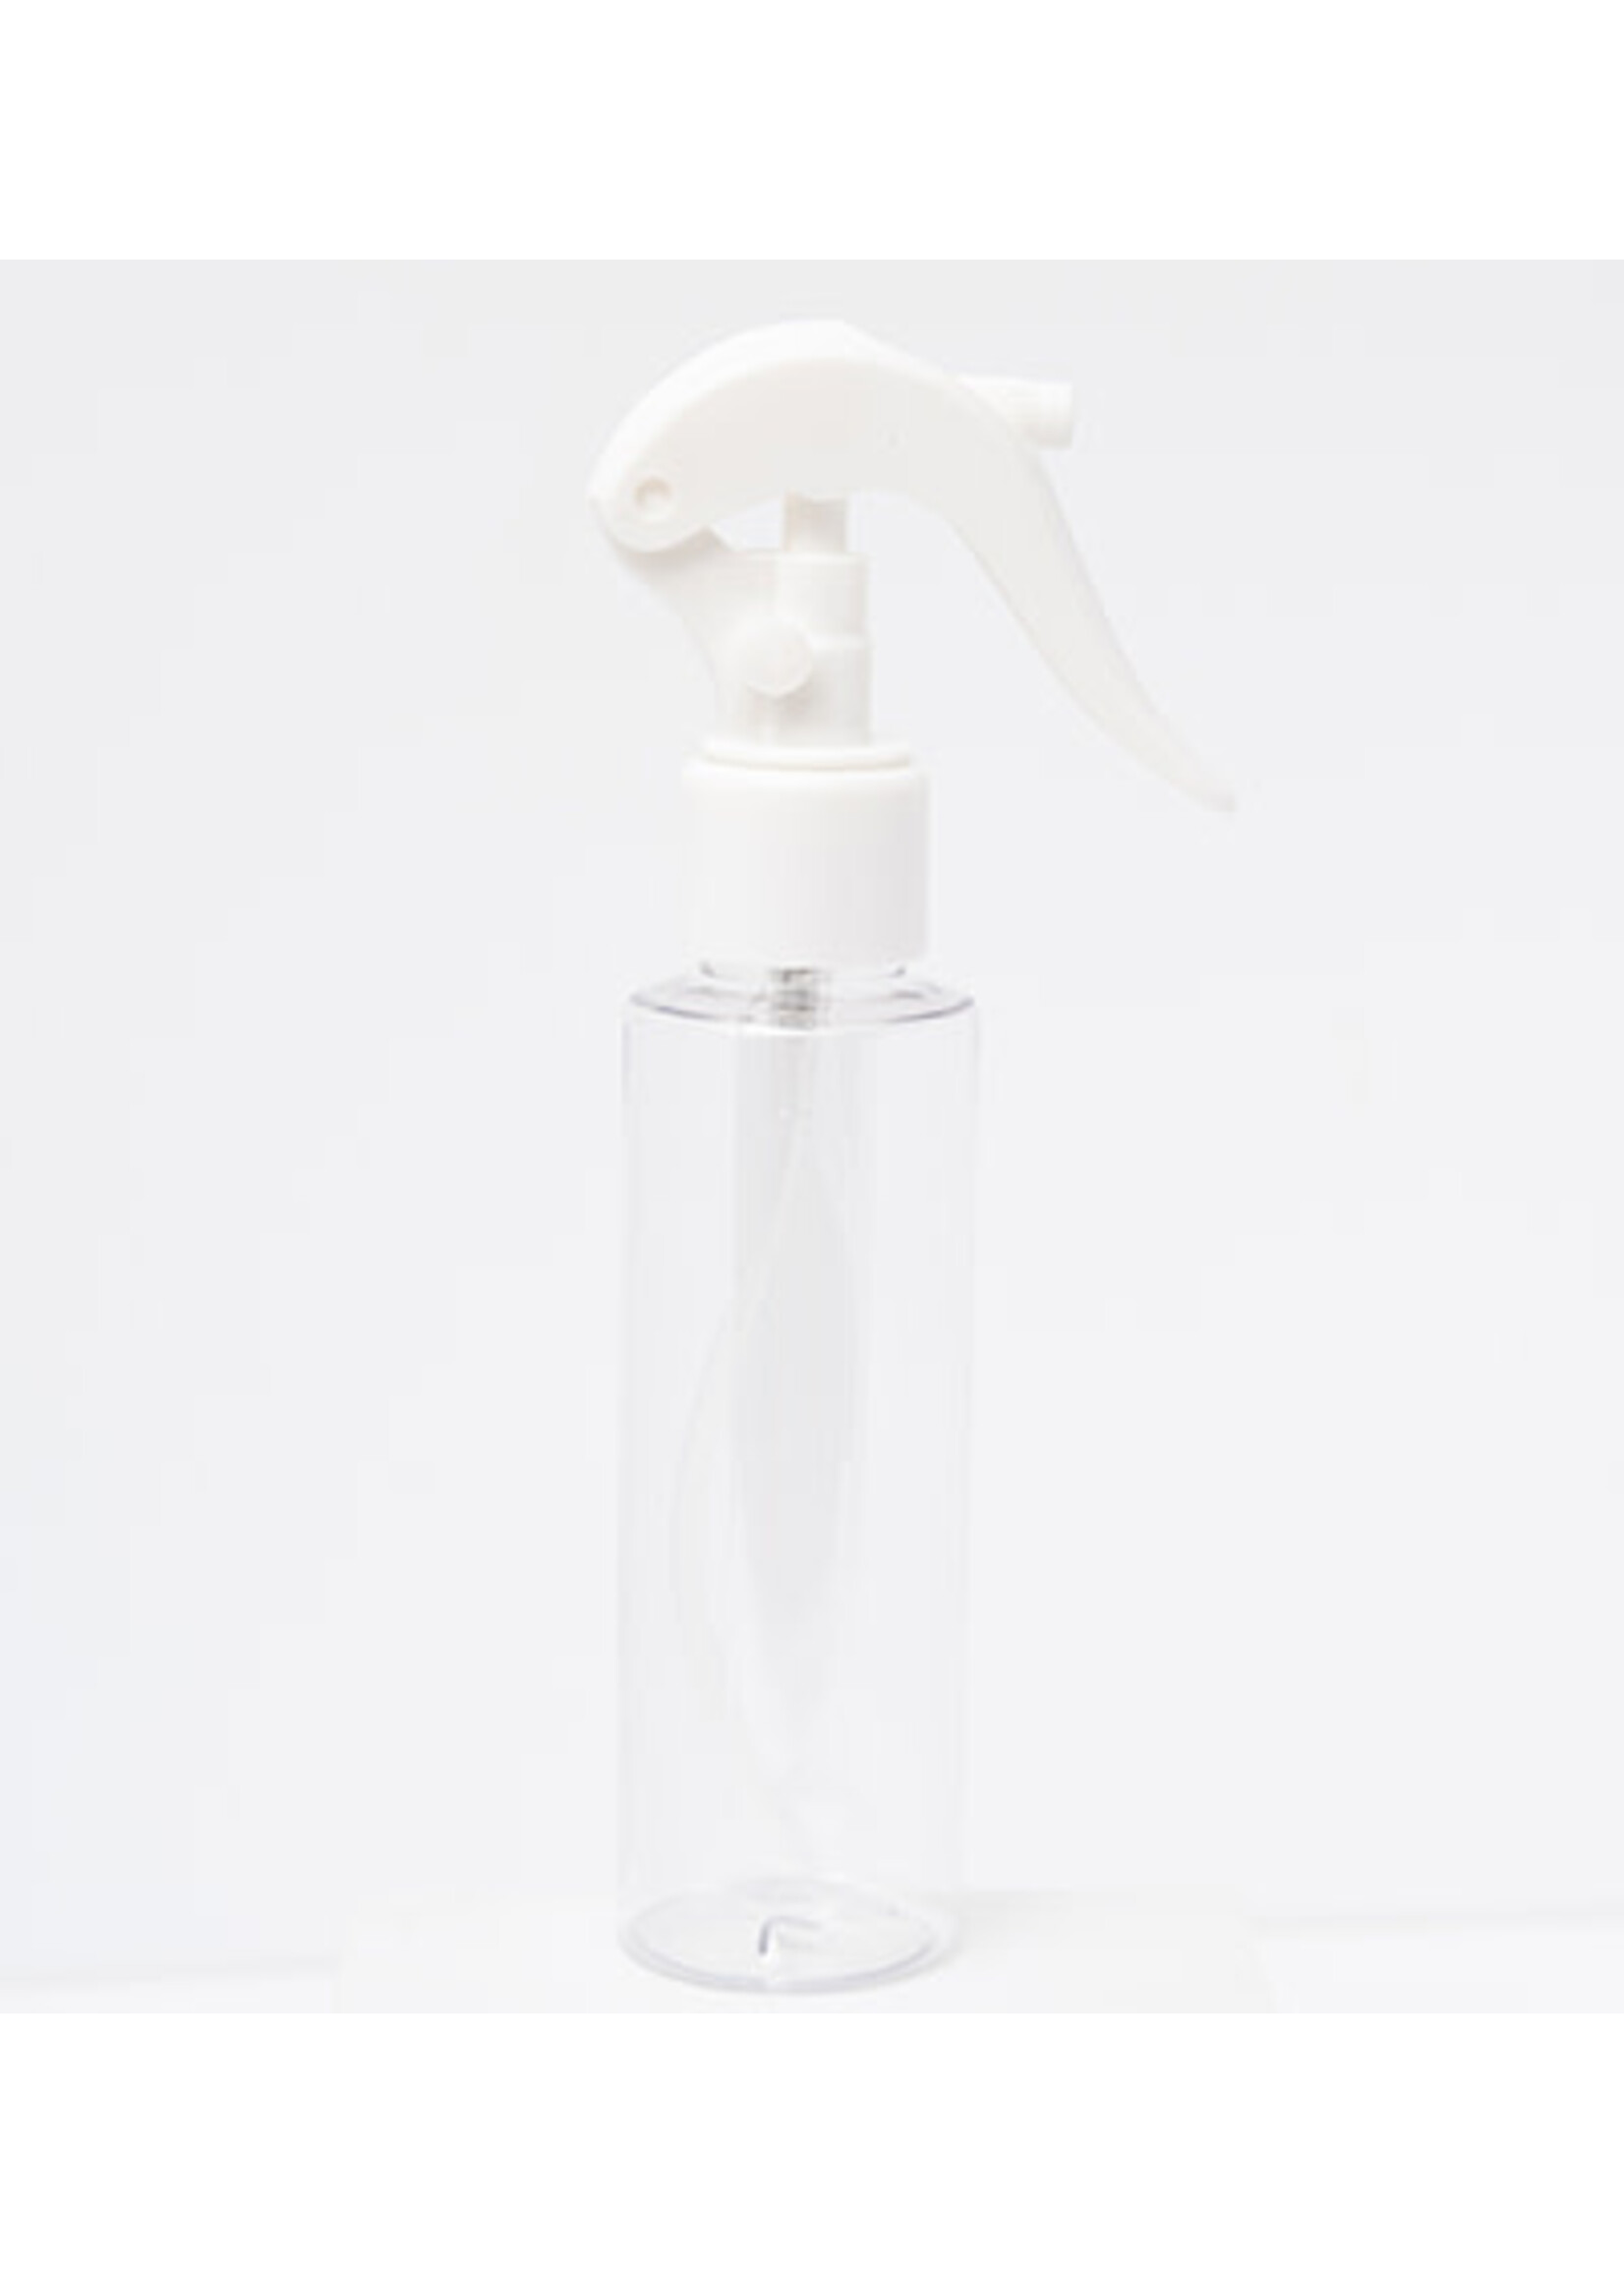 Studio Light SL-TO-SB01 - Spray bottle Tools Essentials nr.01